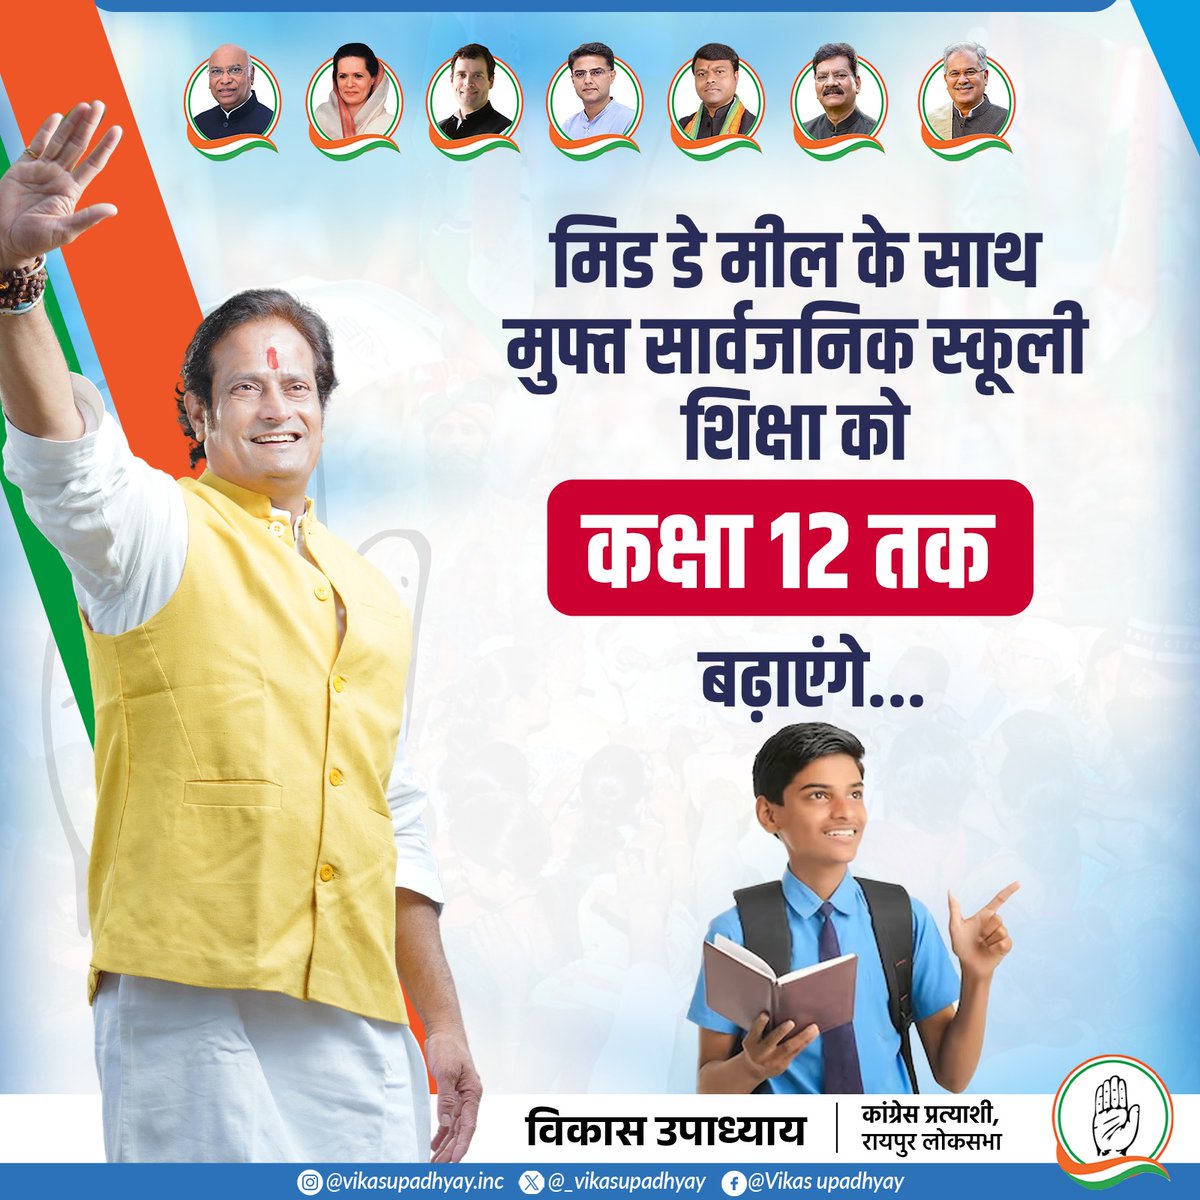 मिड डे मील के साथ मुफ्त सार्वजनिक स्कूली शिक्षा को कक्षा 12 तक बढ़ाएंगे।

#हाथ_बदलेगा_हालात✋ 
#hathbadlegahalaat #Congress 
#congress2024 #congressguarantee #chattisgarh 
#chattisgarh